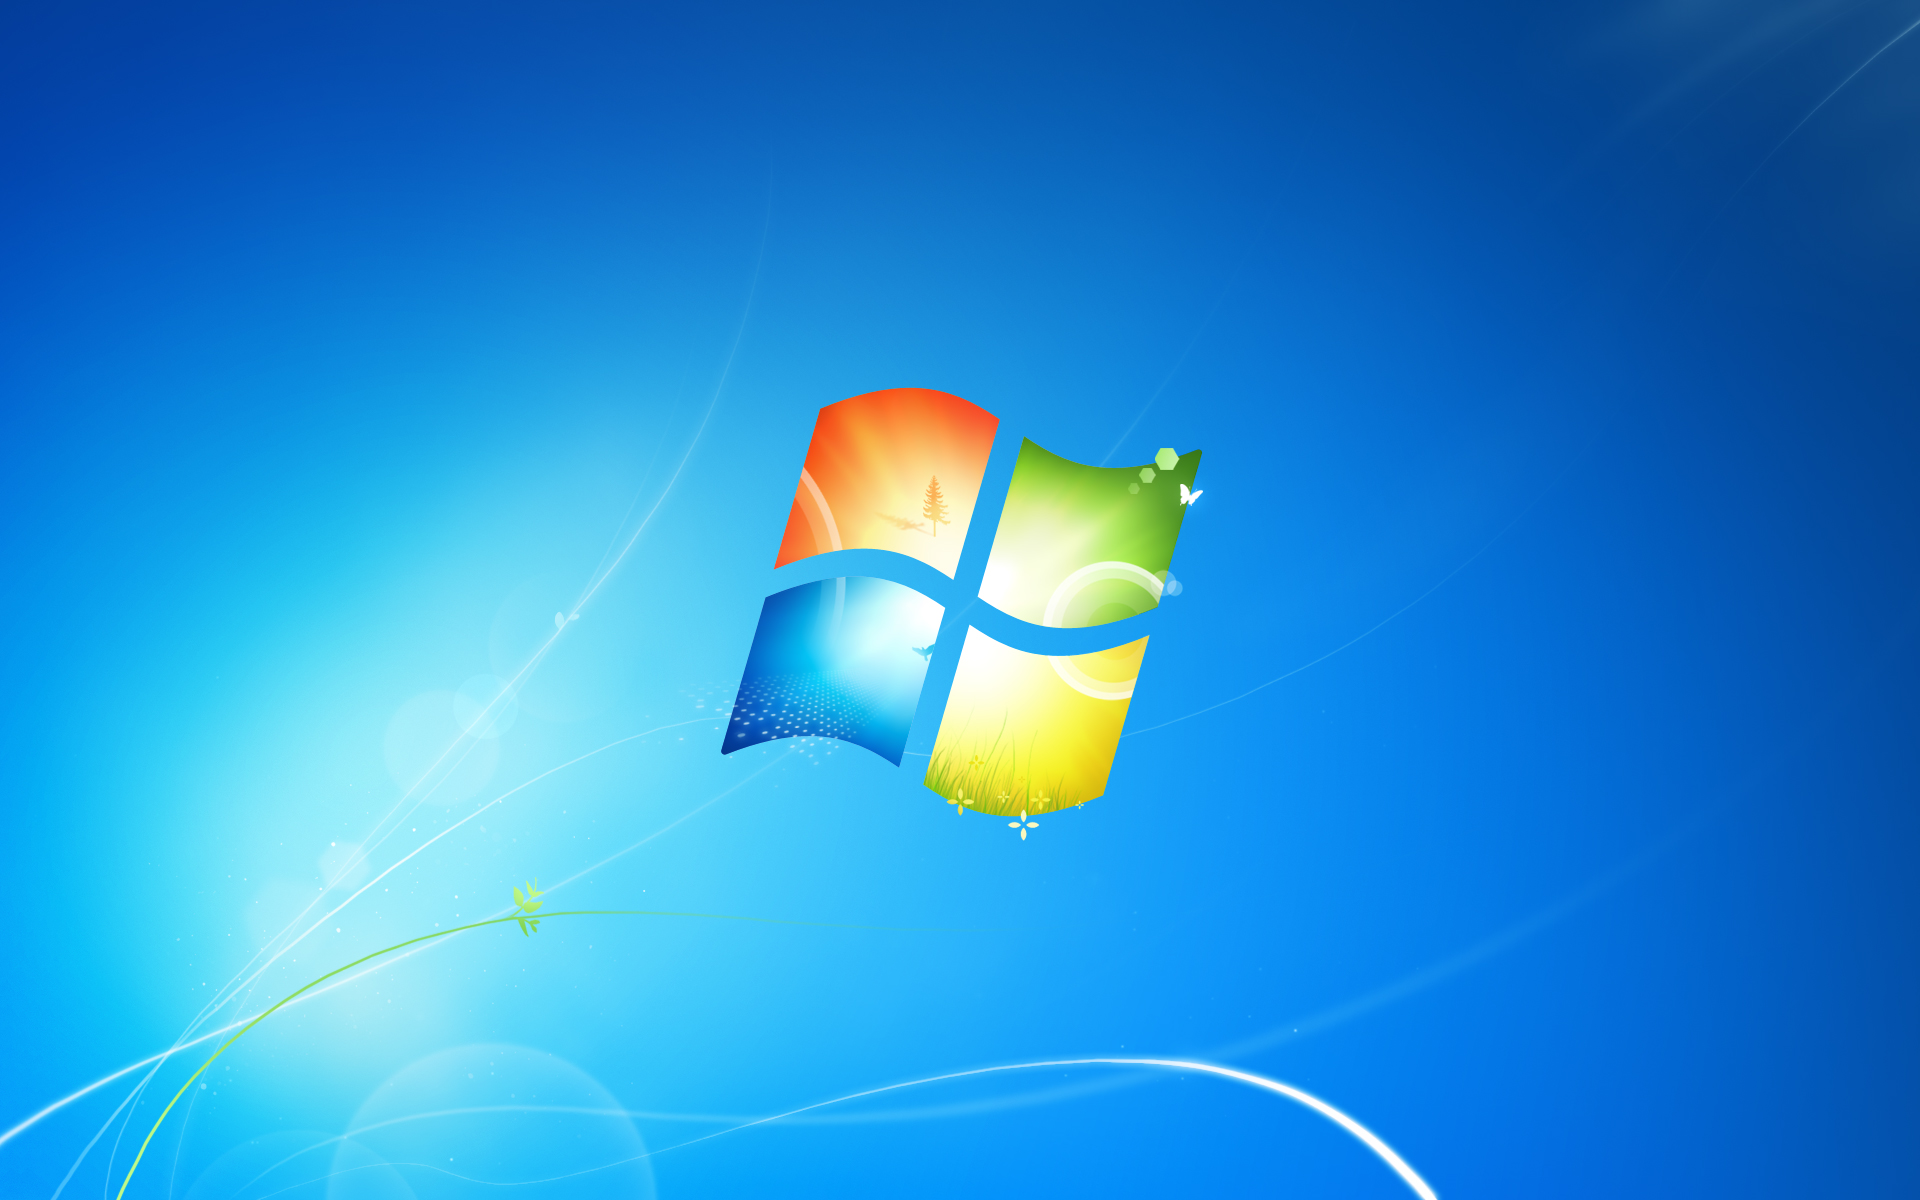 Windows Vista Graphics Image Wallpaper